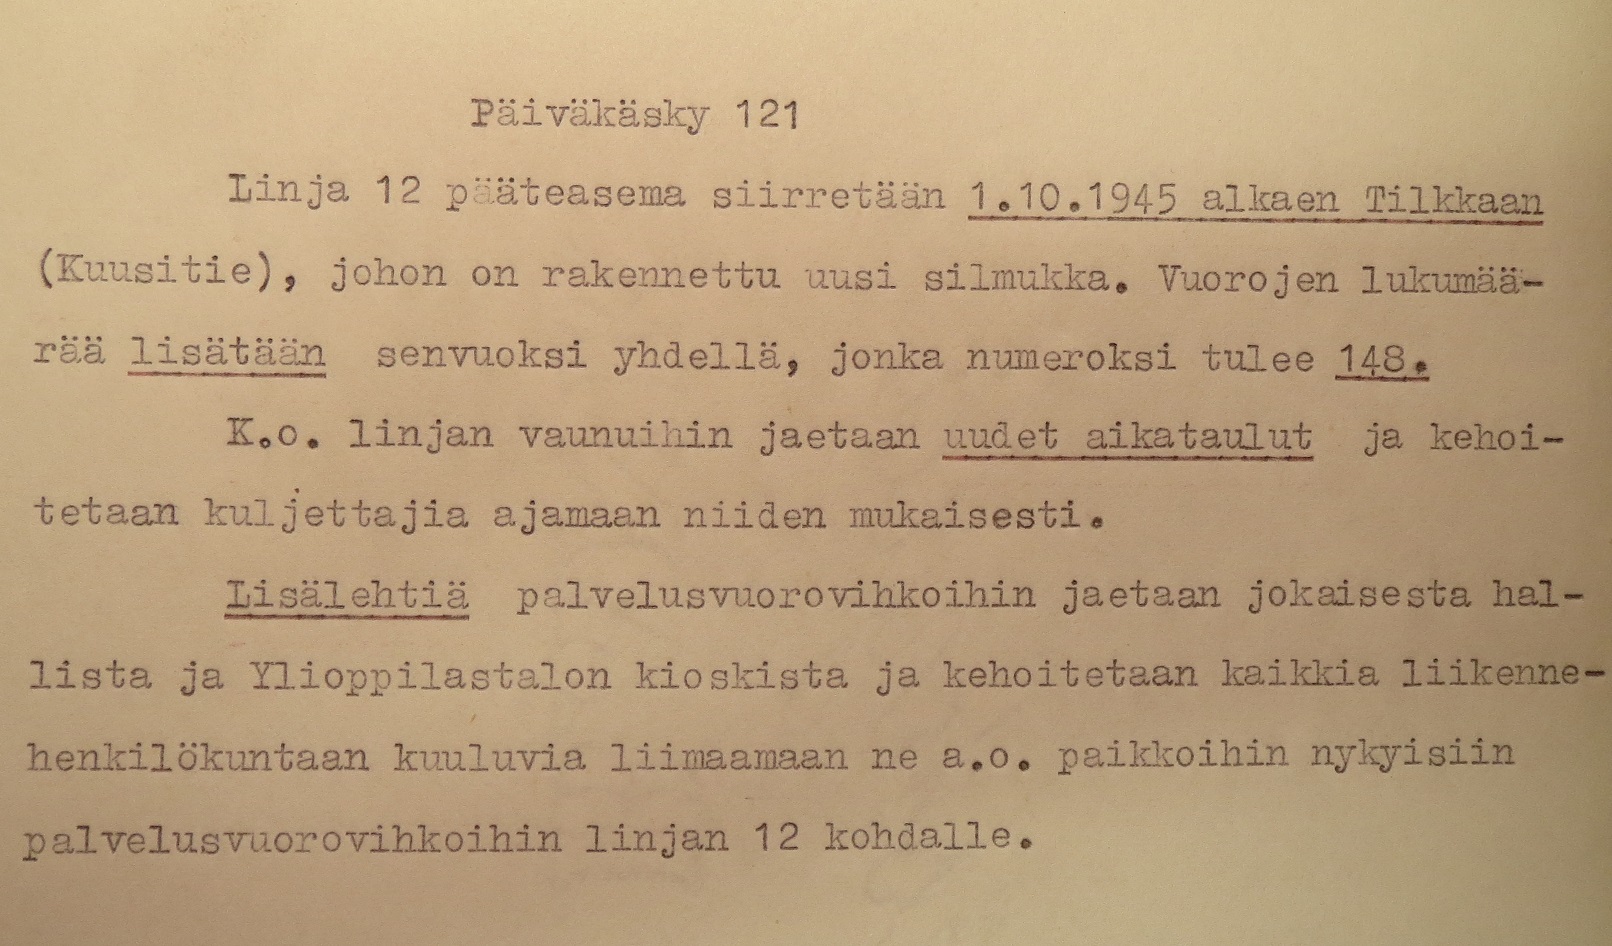 HKL:n päiväkäsky 121/1945